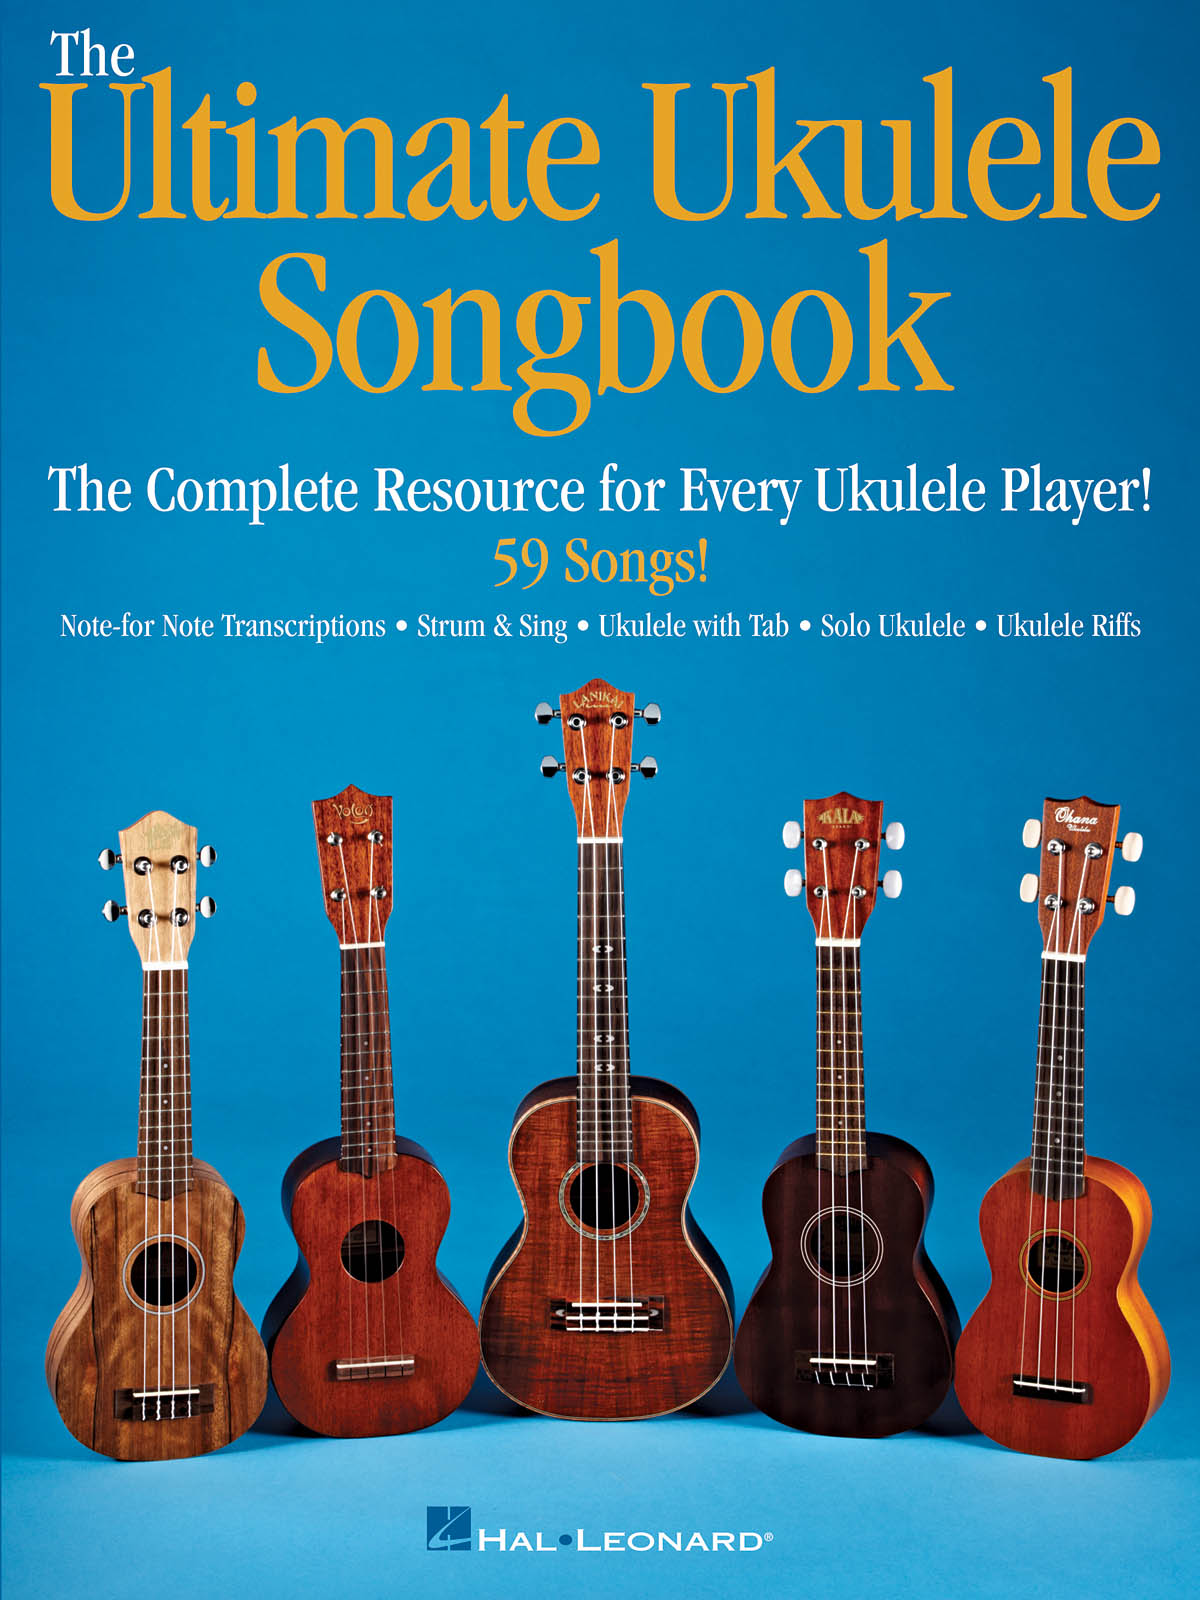 The Ultimate Ukulele Songbook - The Complete Resource for Every Uke Player! - noty pro ukulele